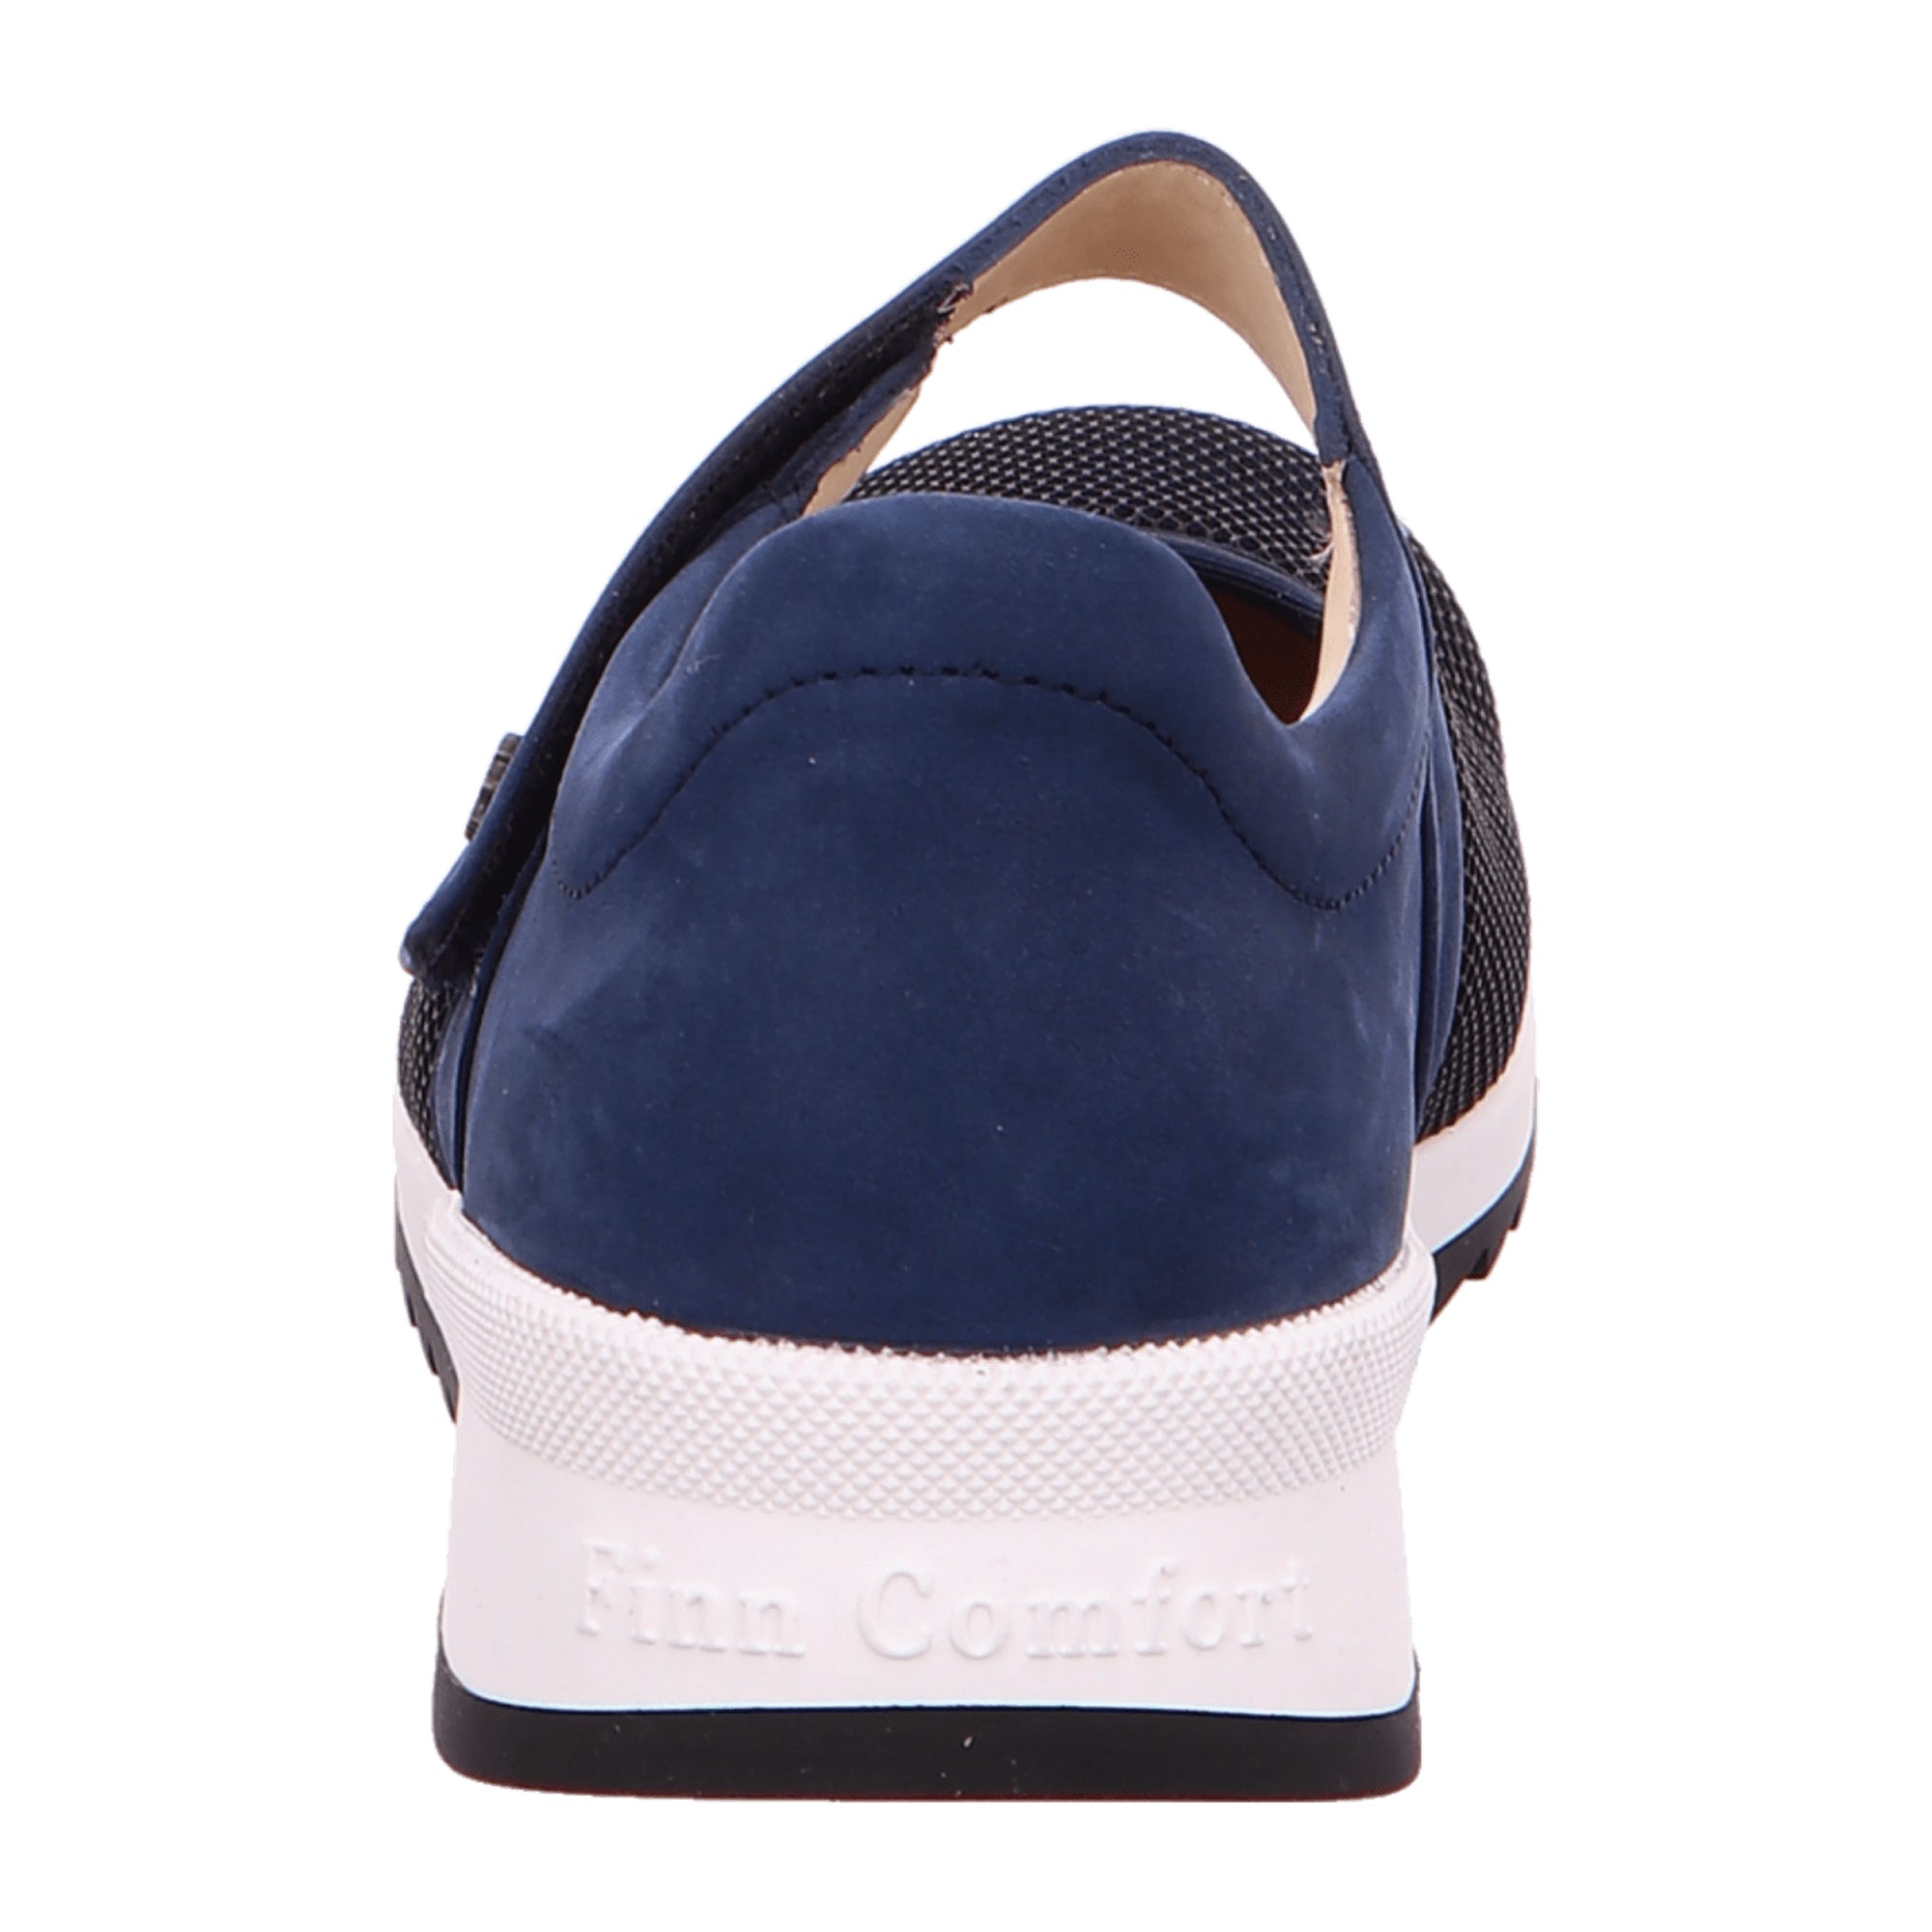 Finn Comfort Assenza Atoll Women's Comfort Shoes, Blue - Stylish & Durable